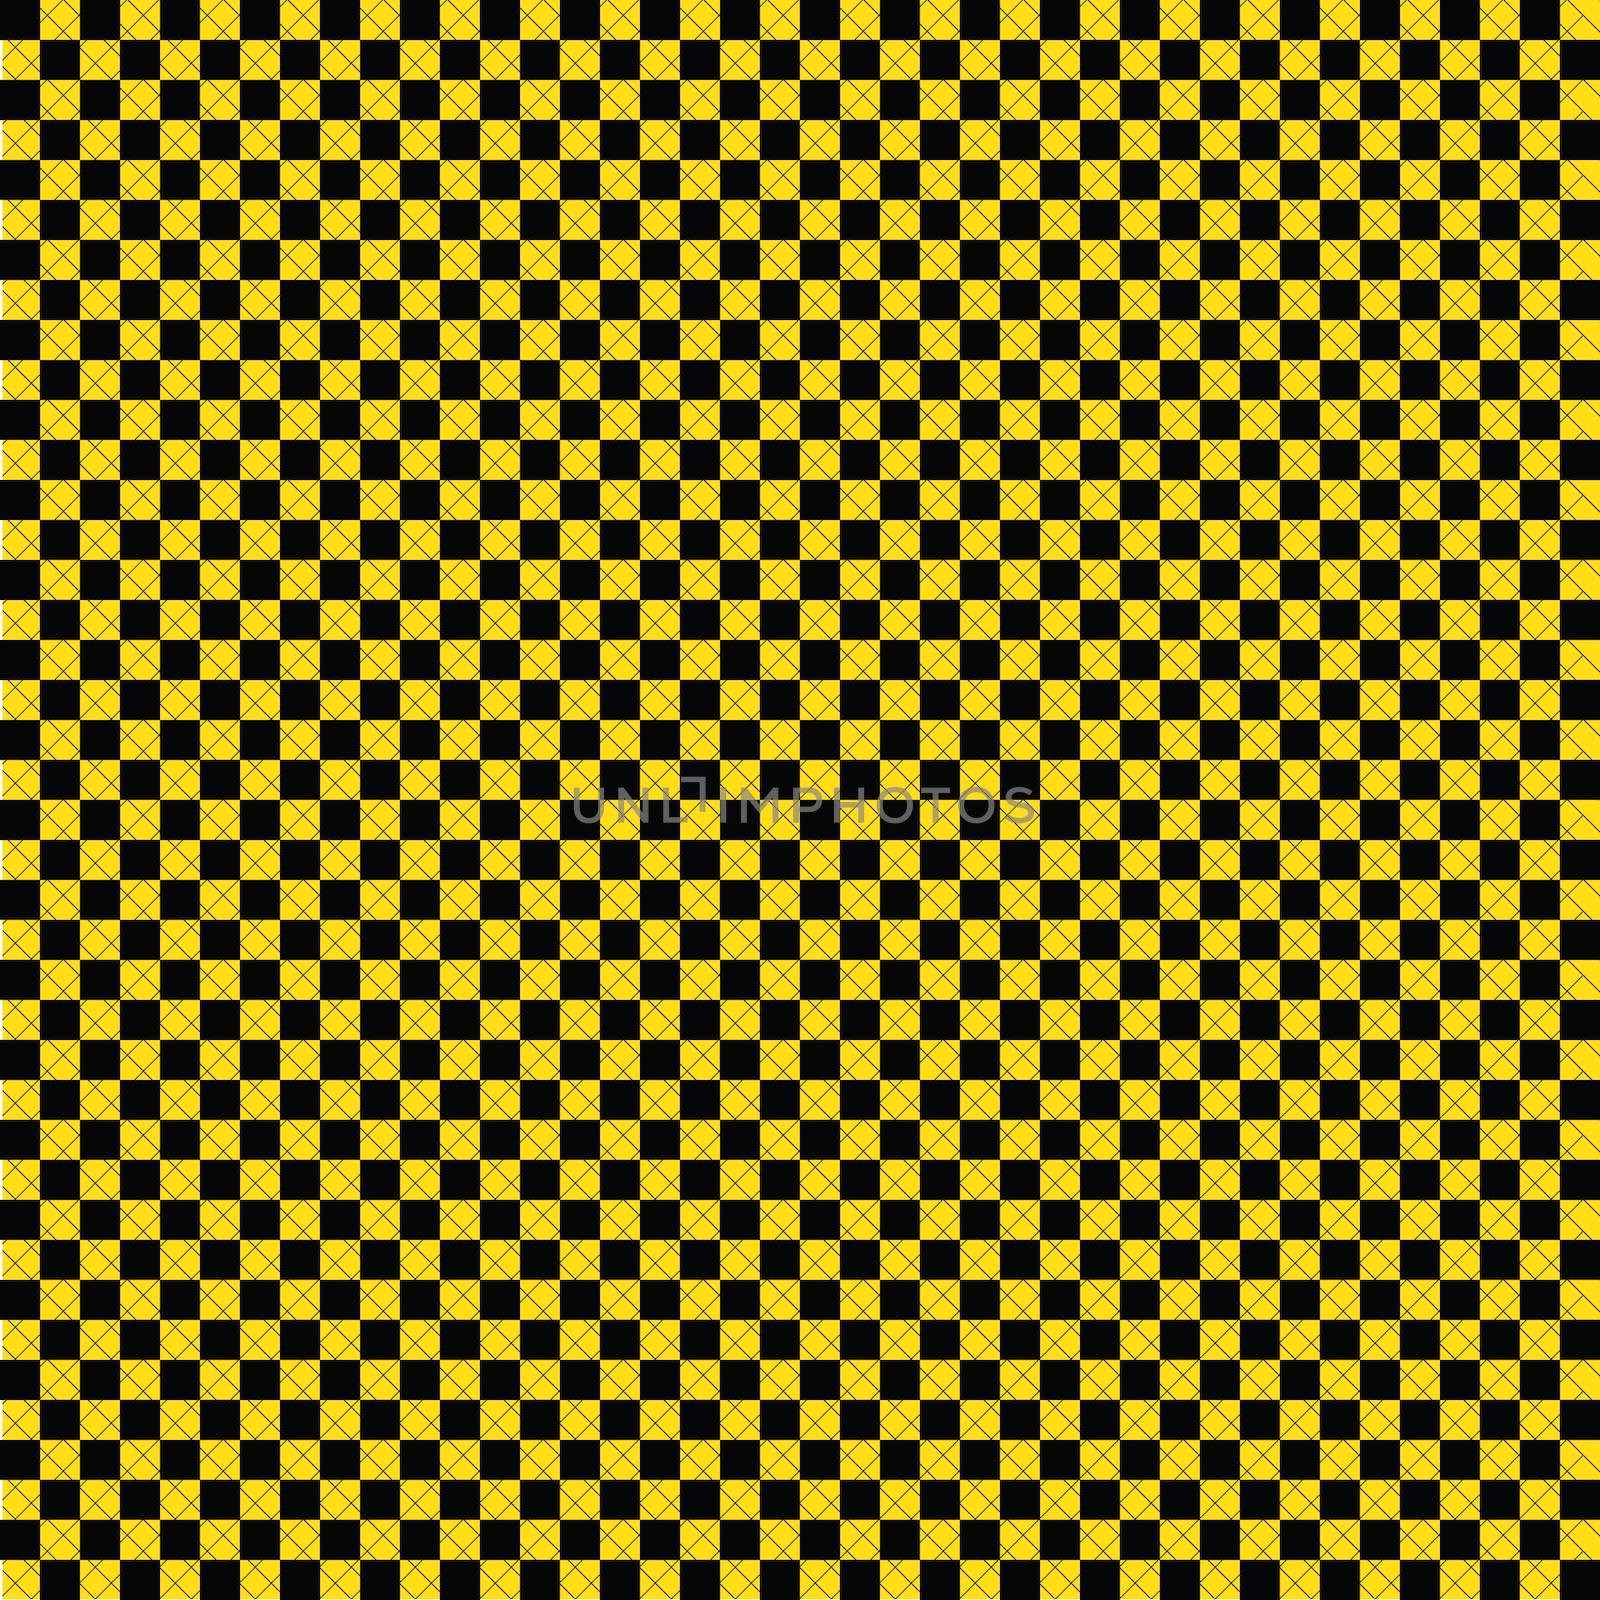 Chequer-Yellow by DragonEyeMedia